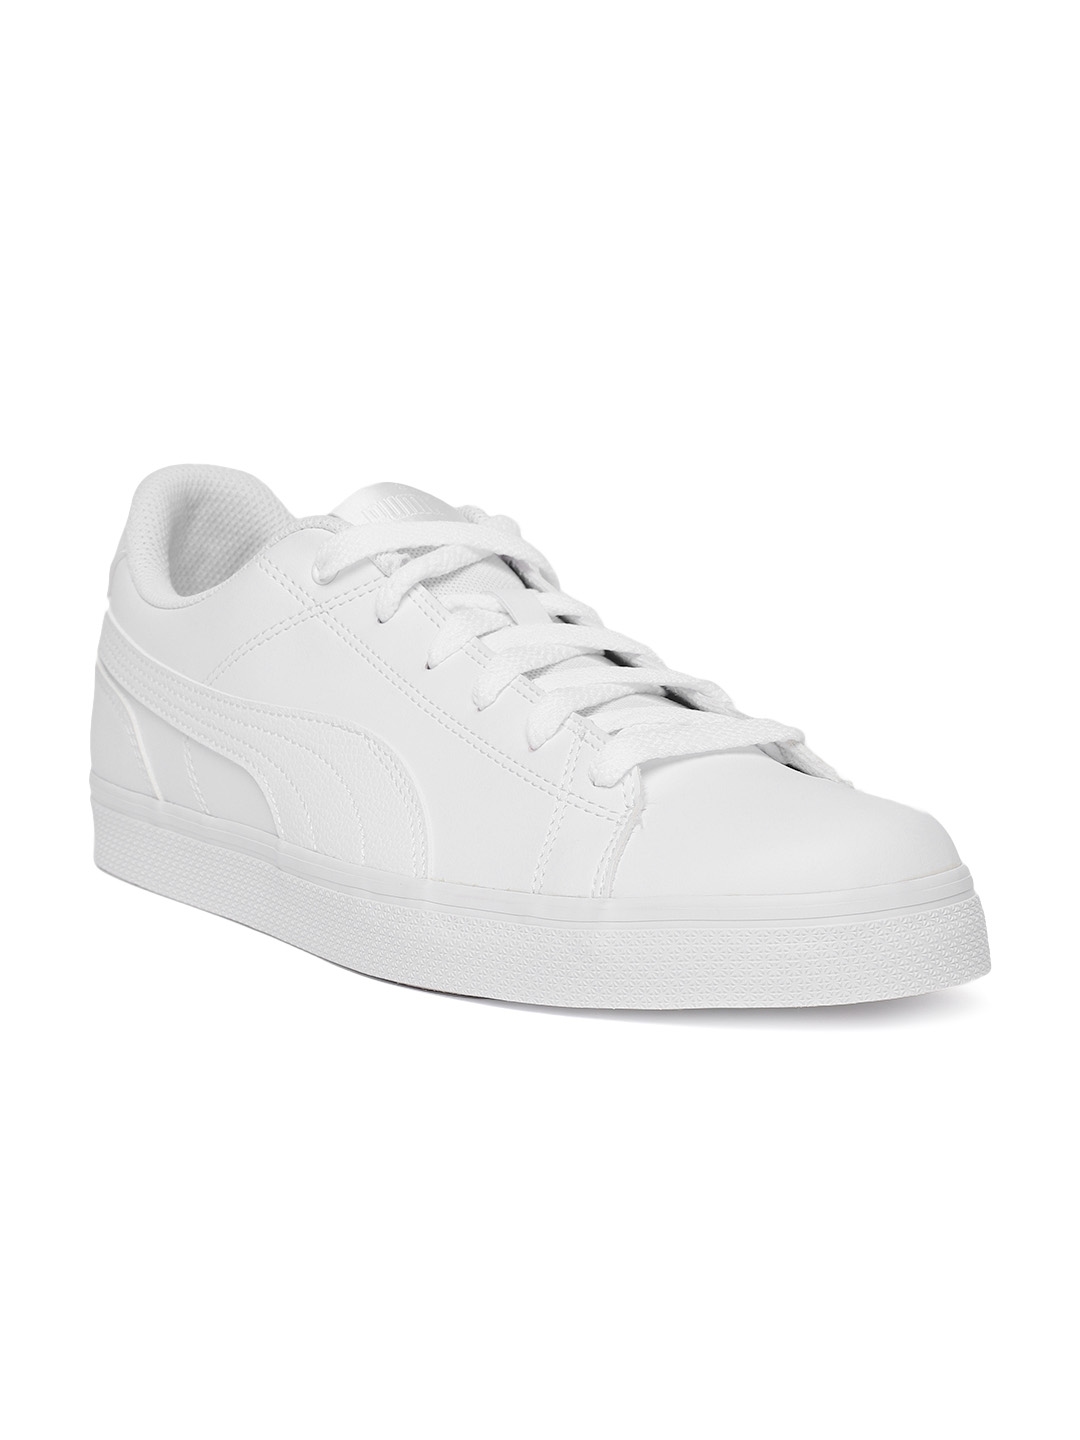 puma unisex sneakers white